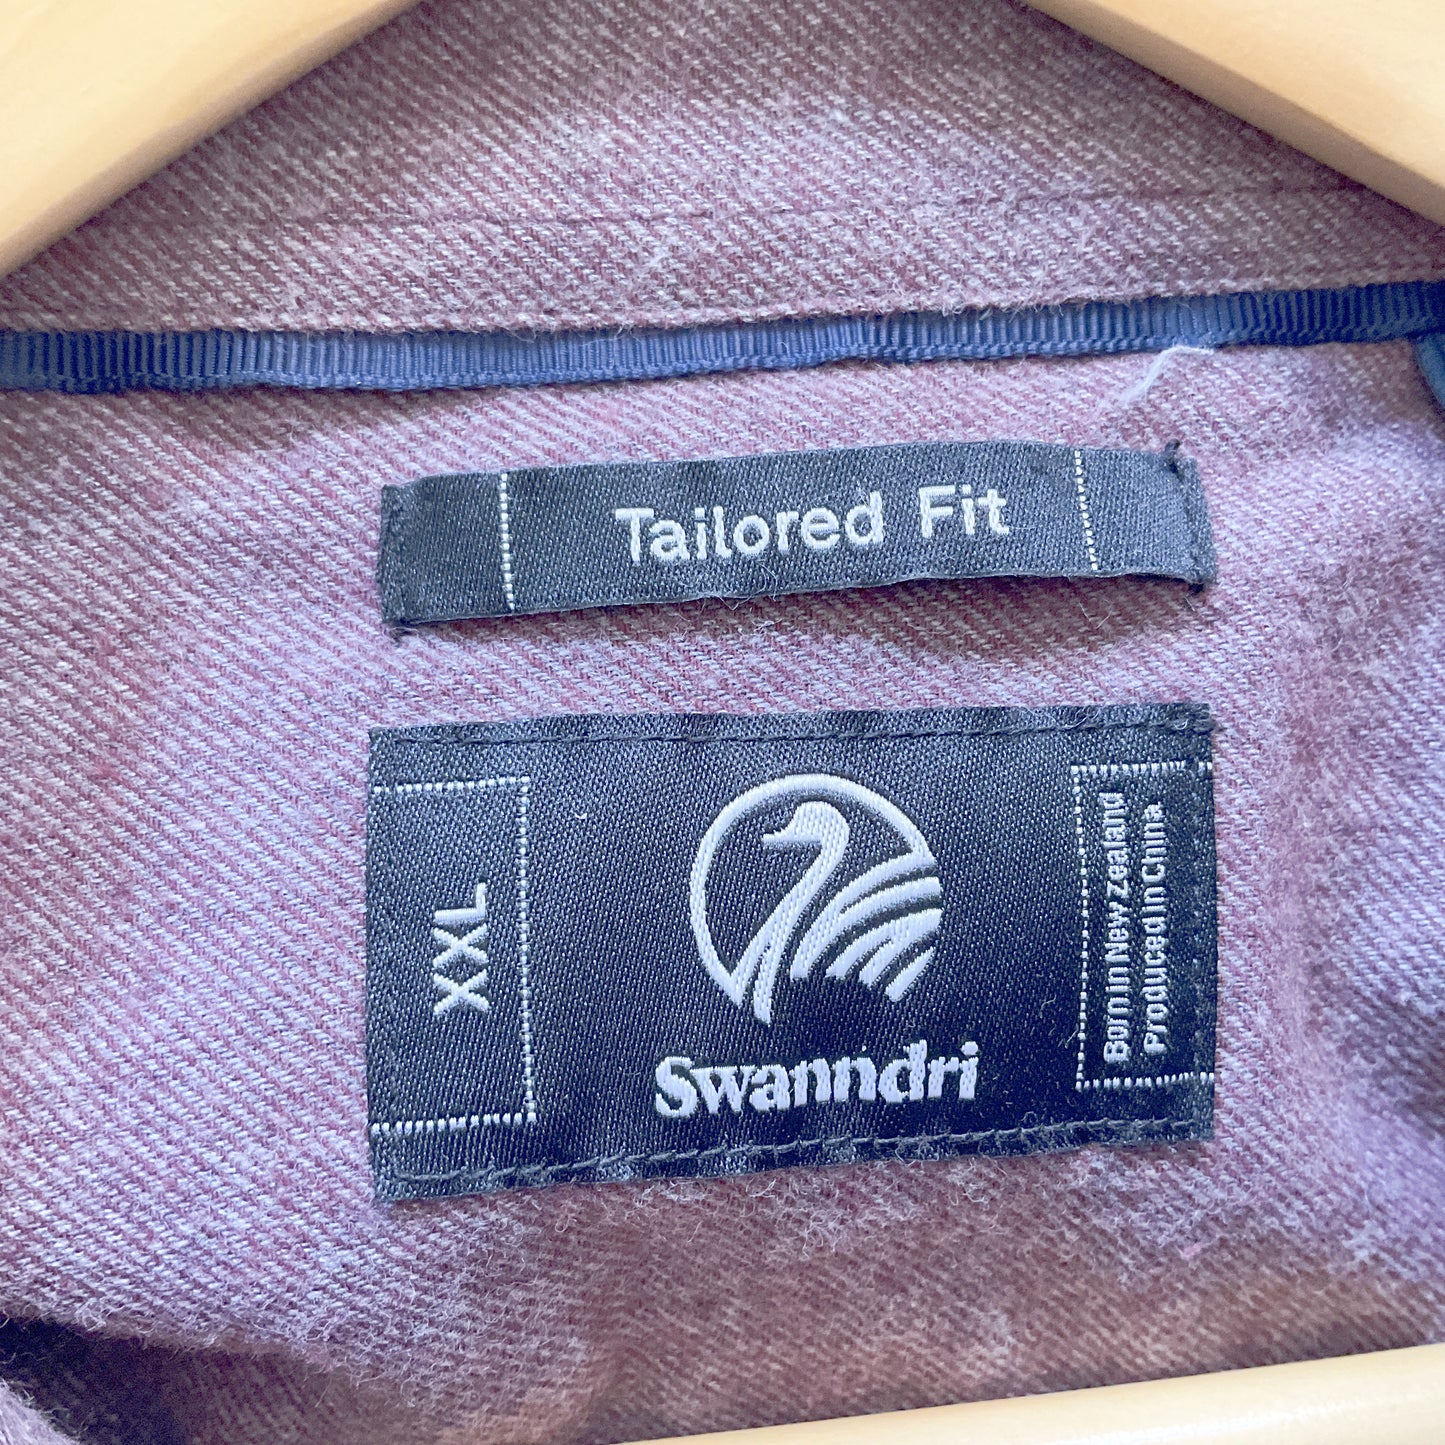 Swanndri - Tailored Fit Shirt